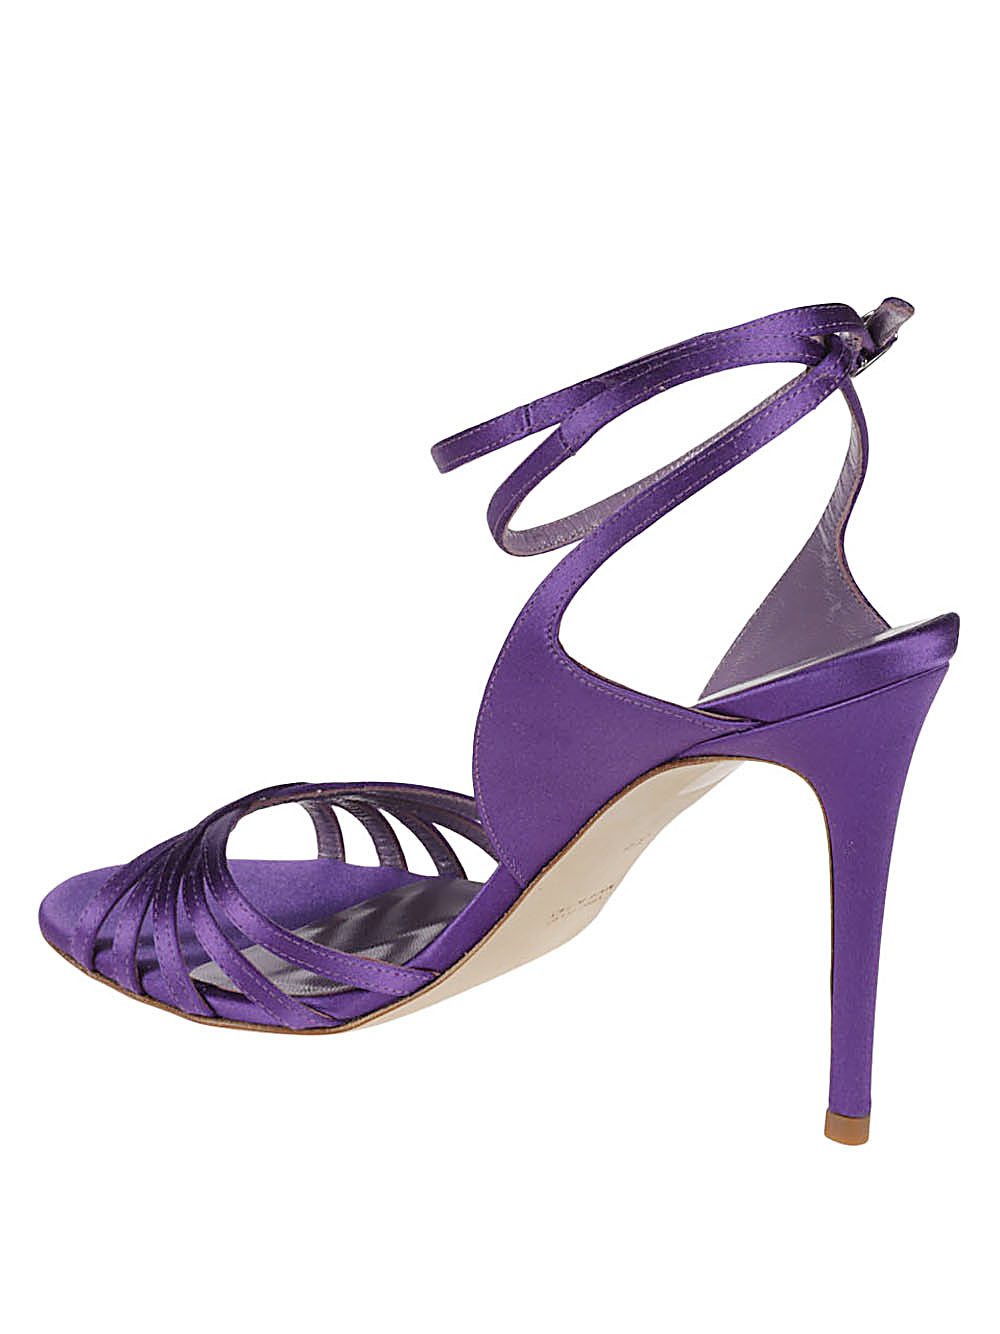 Lella Baldi Lella Baldi Sandals Purple